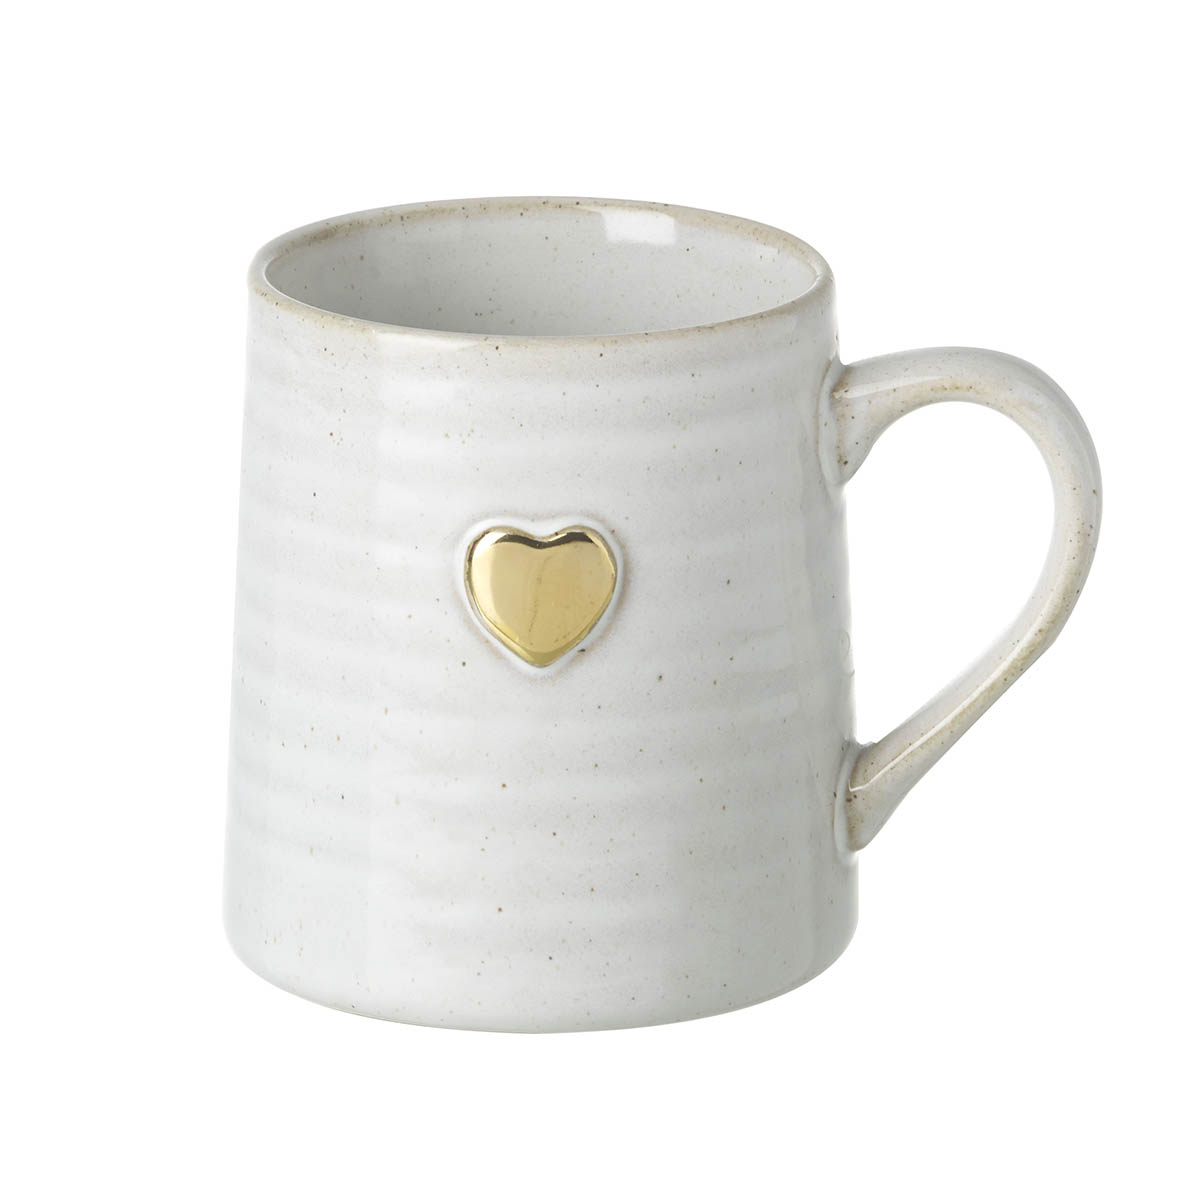 Mug 12,5x9x10 cm GOLD HEART cream porcelain